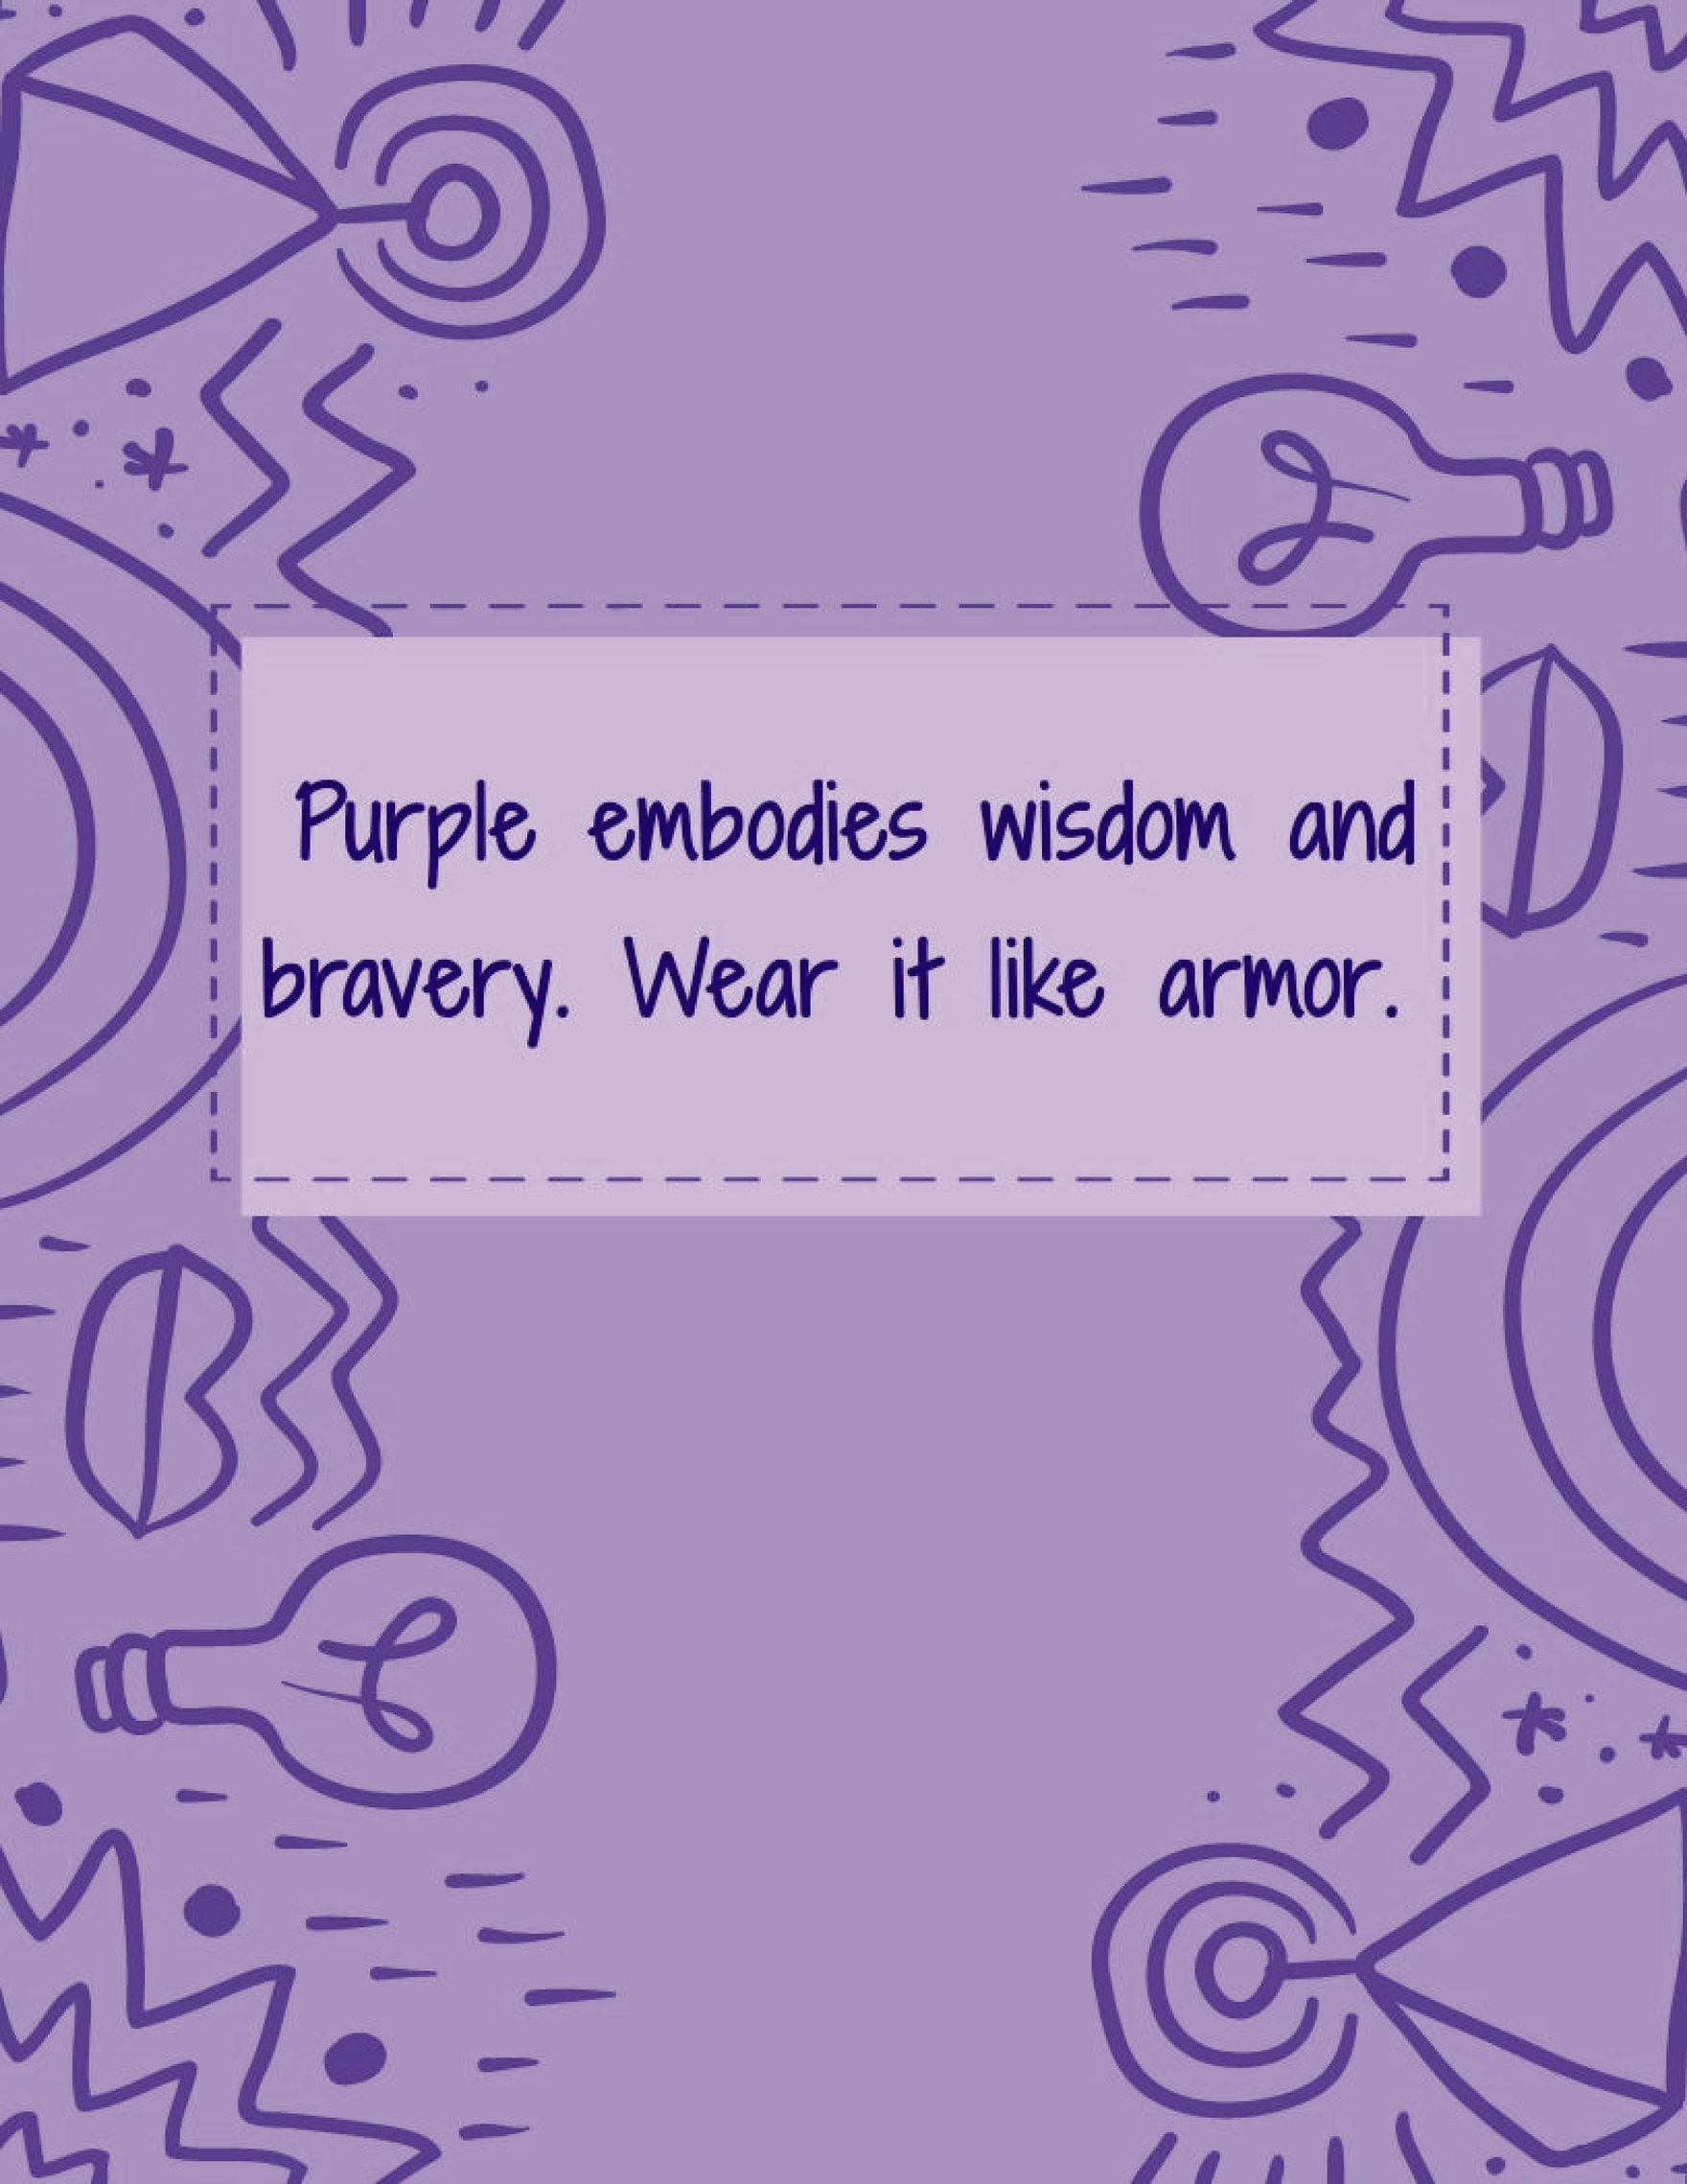 cute binder cover templates purple